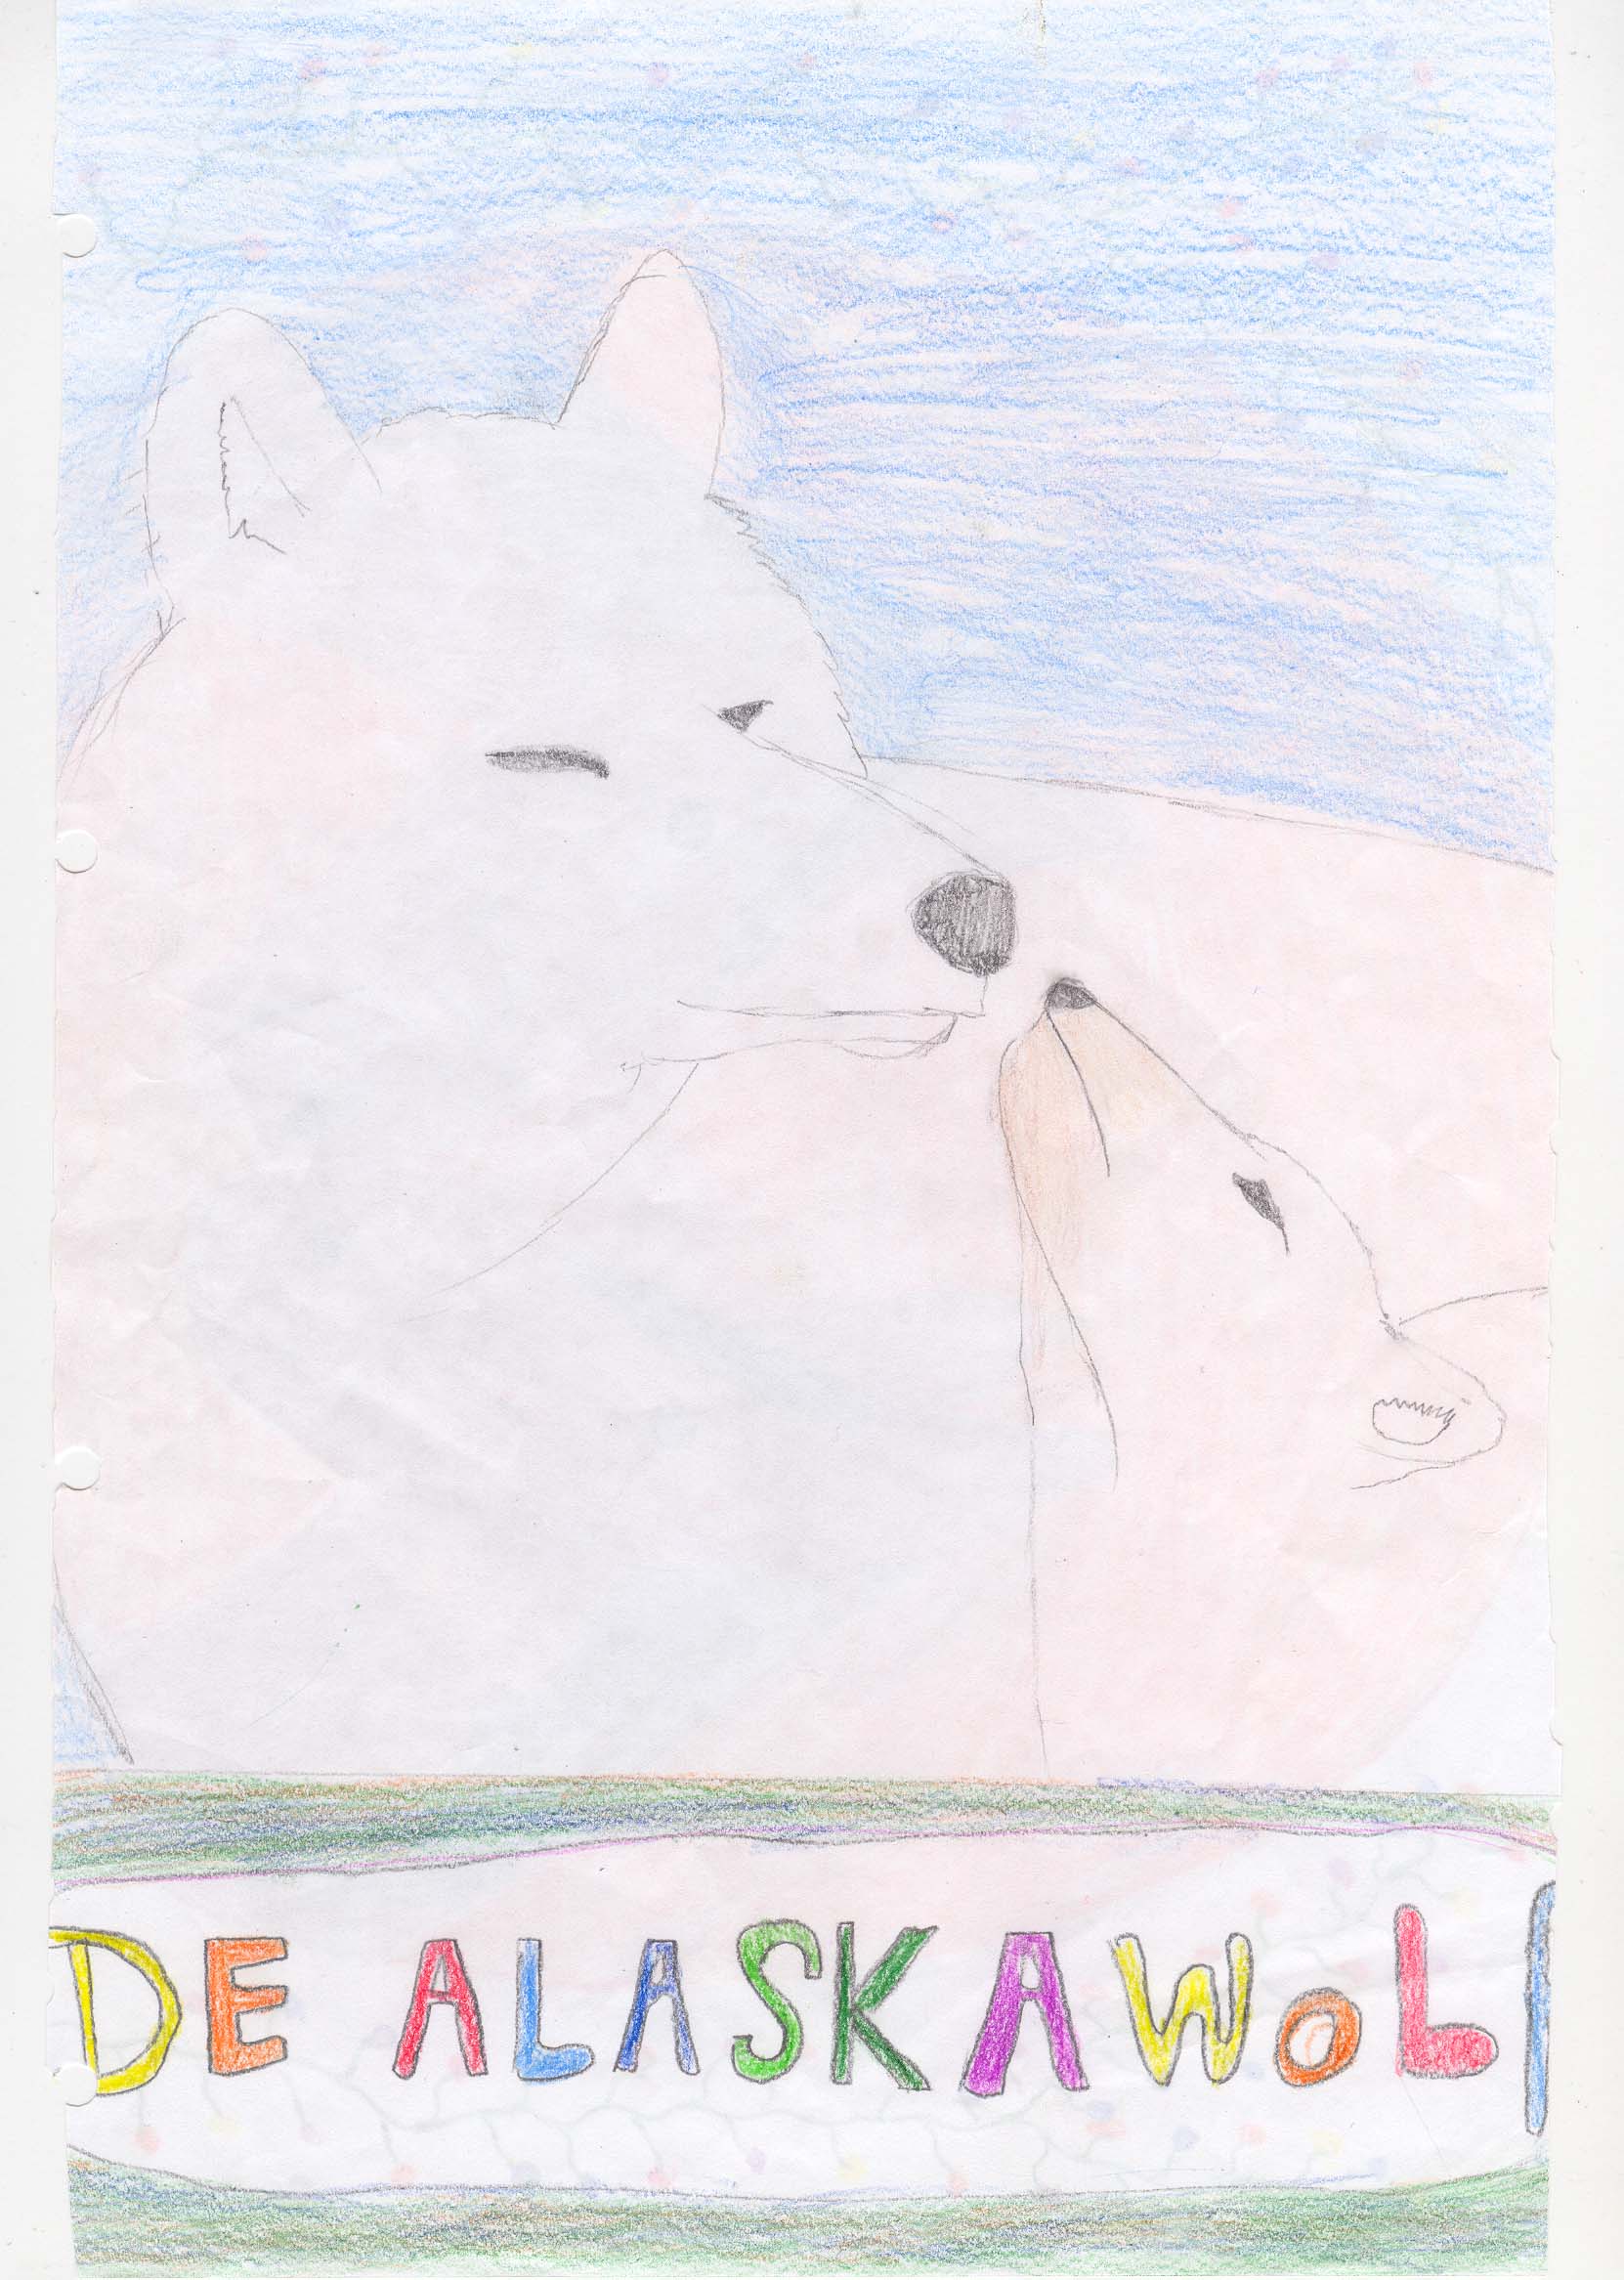 Alaskawolf by Yeslen-Muurlas